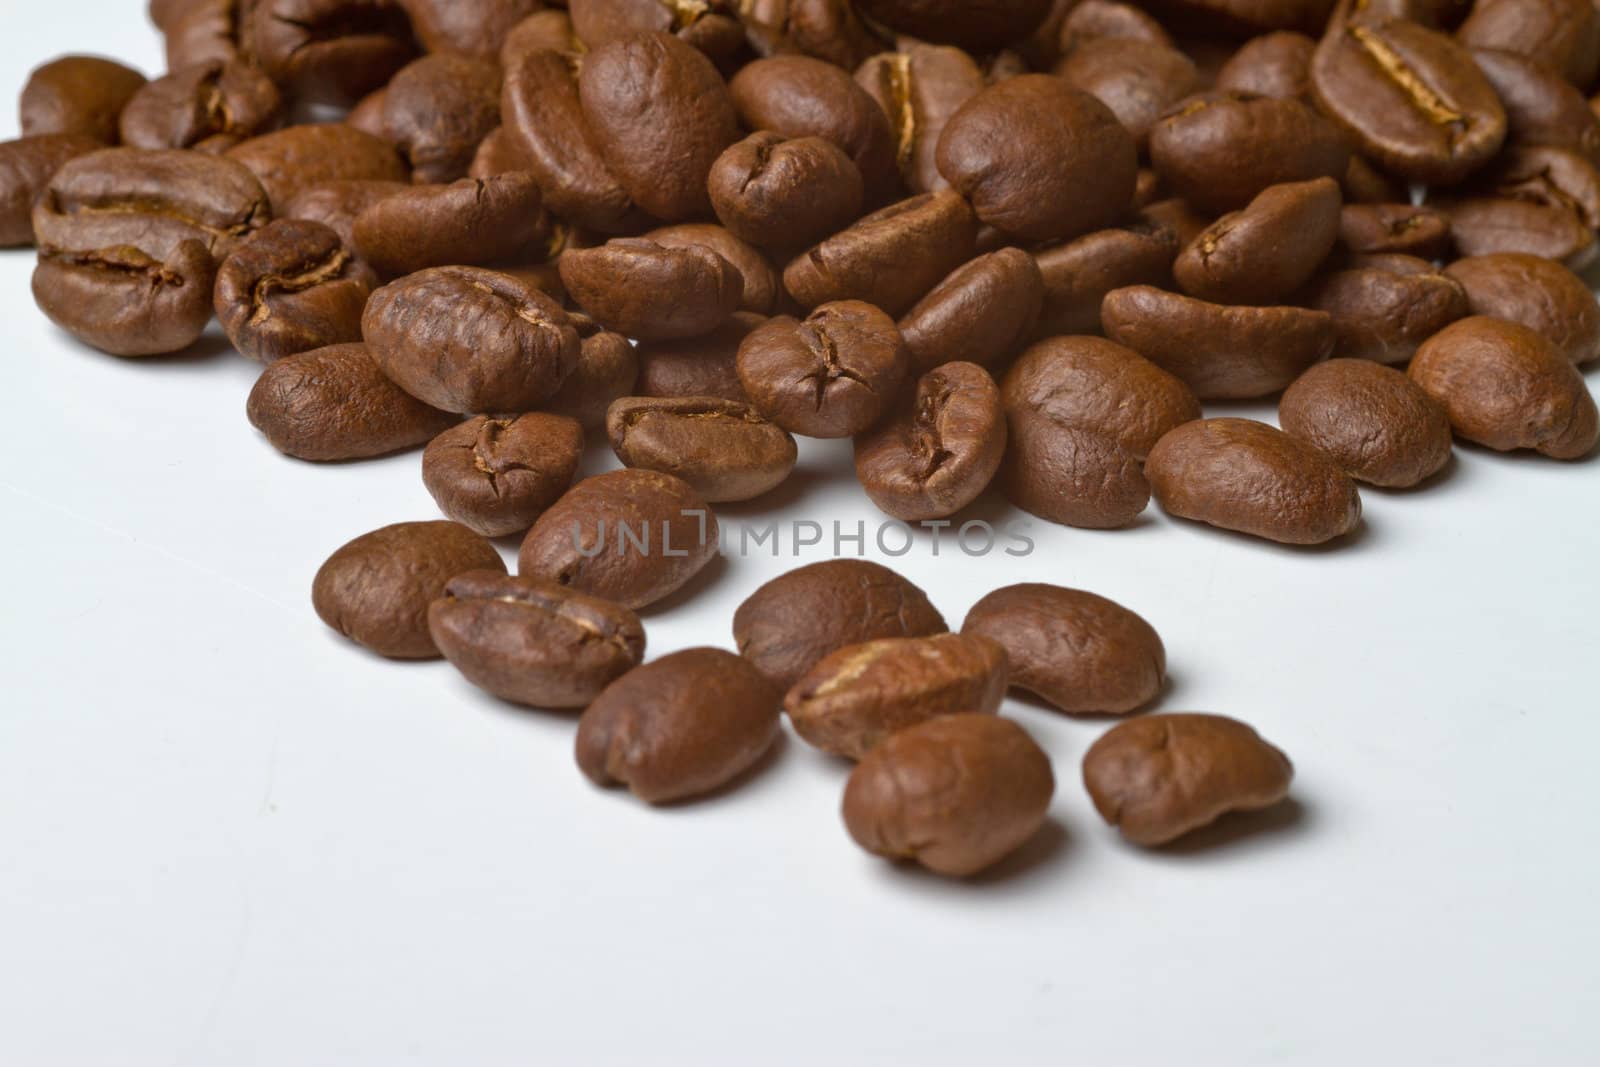 Coffee beans by lavsen